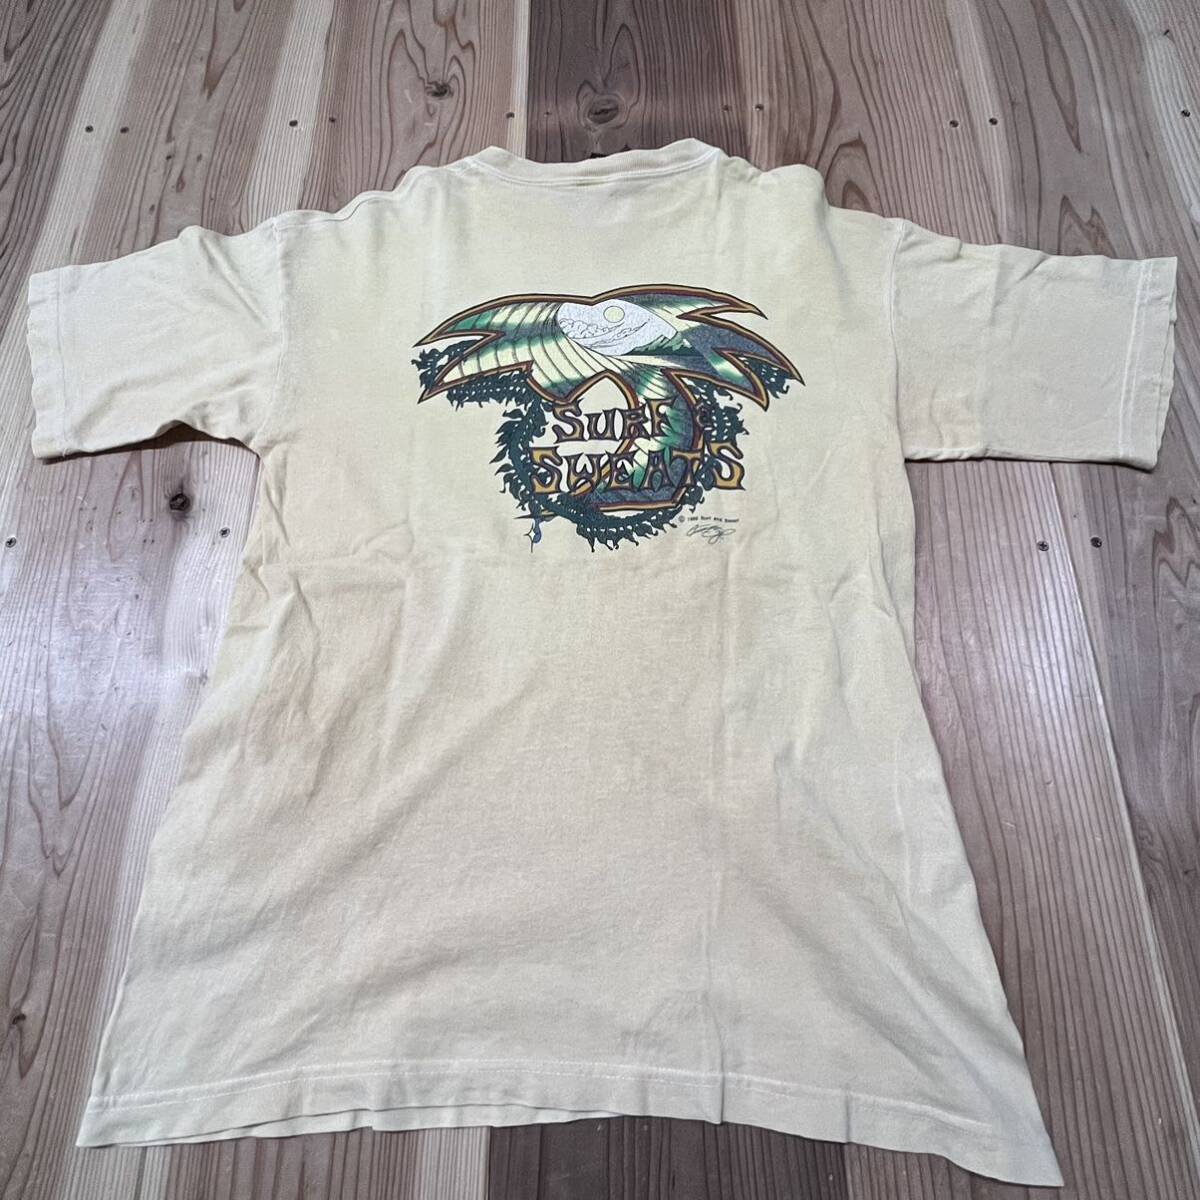 90s USA製 FACTORY ARTWEAR surfand sweat デザインTシャツ T-shirt TEE 半袖 サーフィン ストリート イエロー サイズM 玉mc2849_画像8